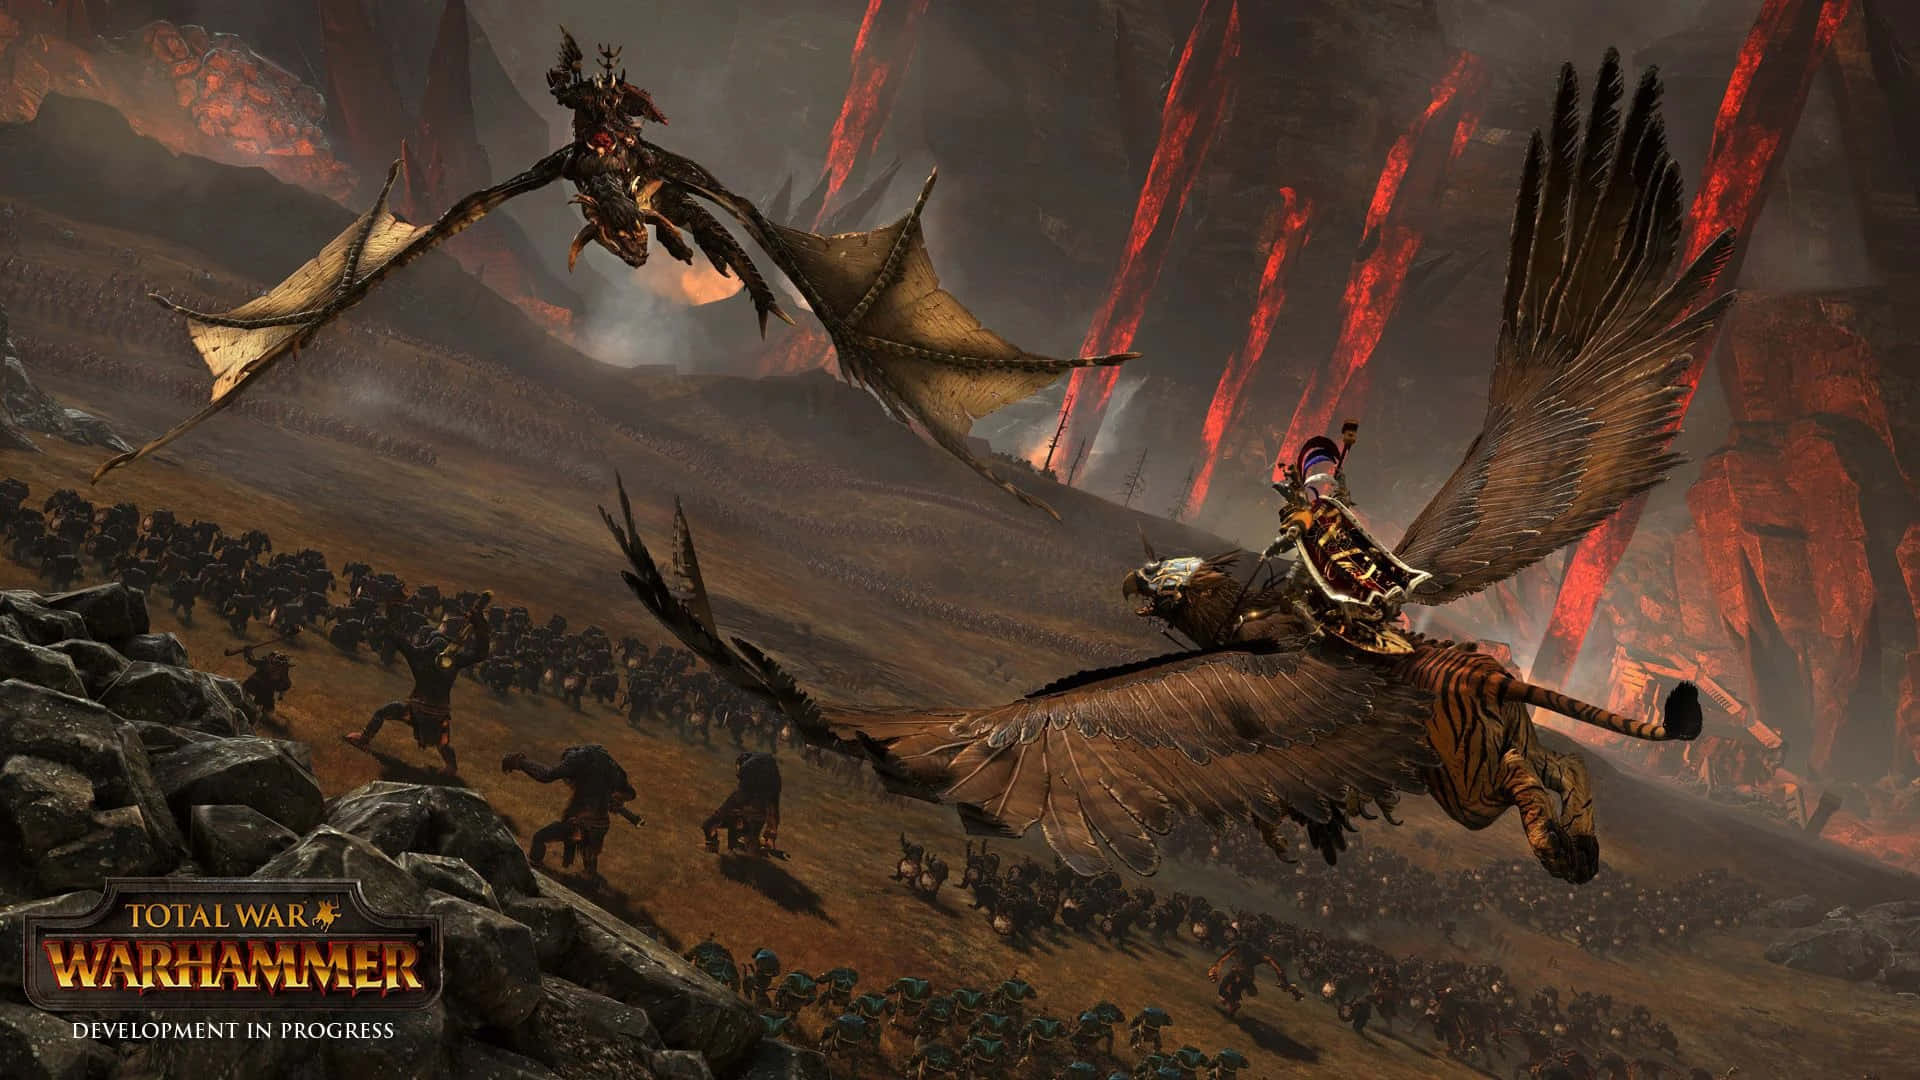 Epic Battle Scene – Total War: Warhammer Background